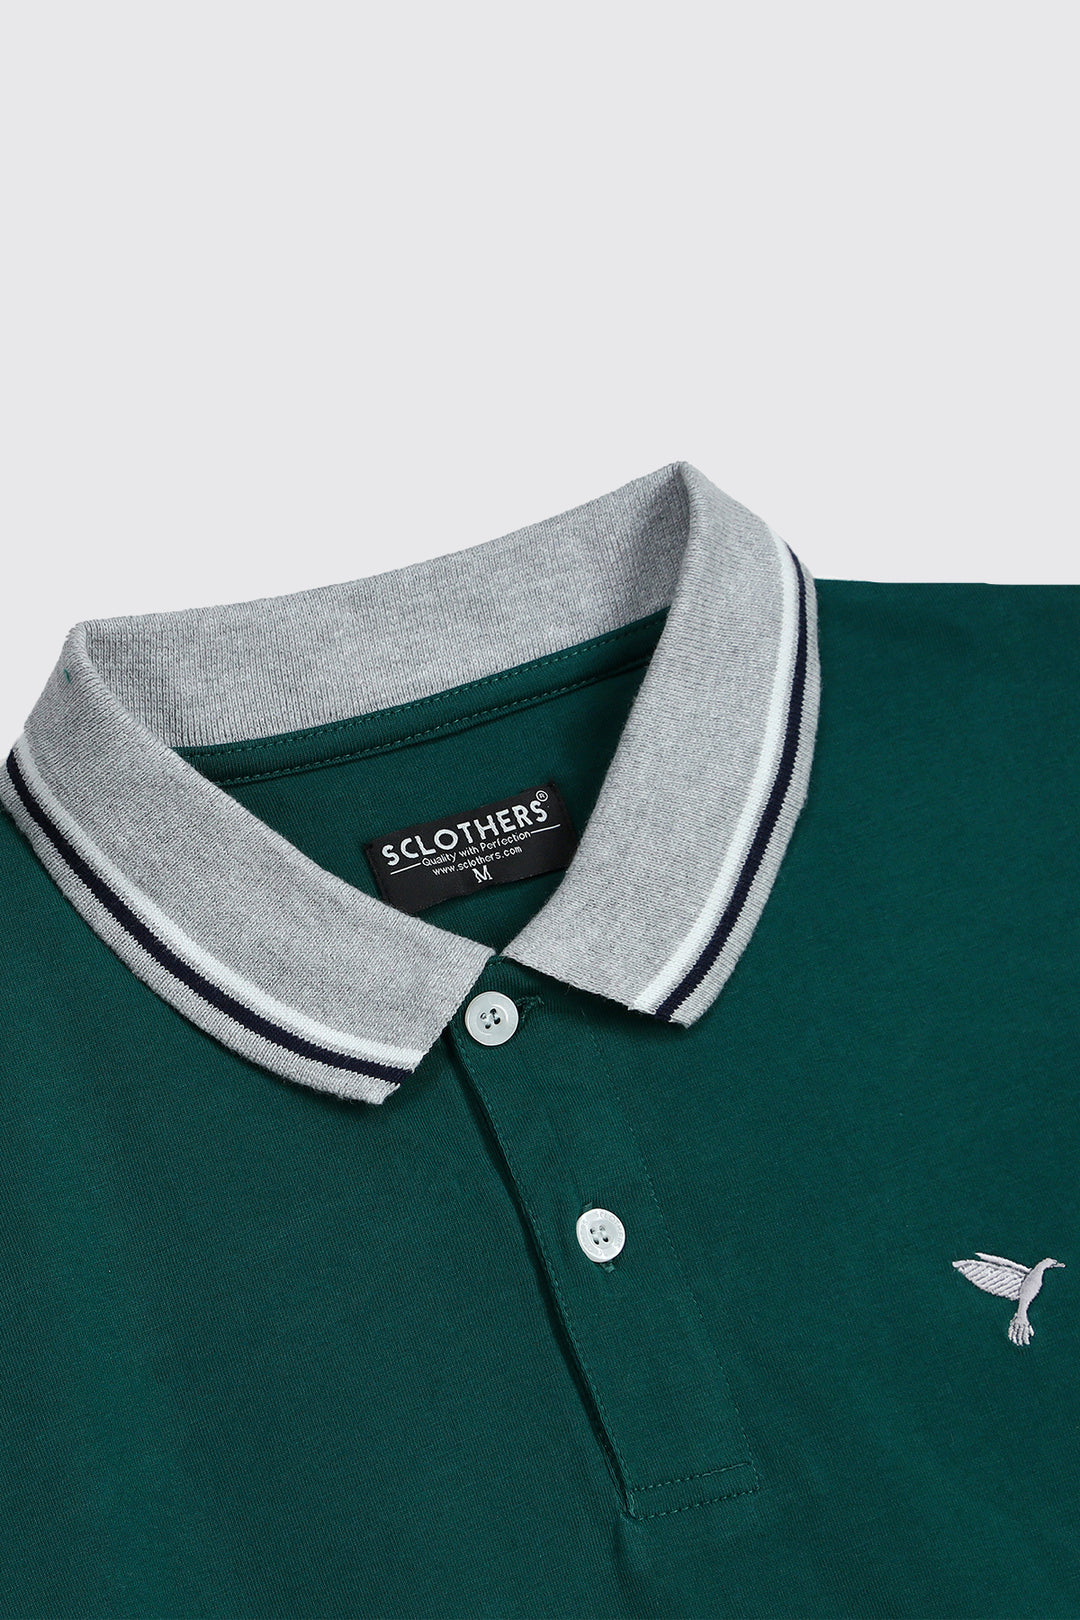 Teal & Heather Grey Tipped Collar Shirt - A23 - MP0214R